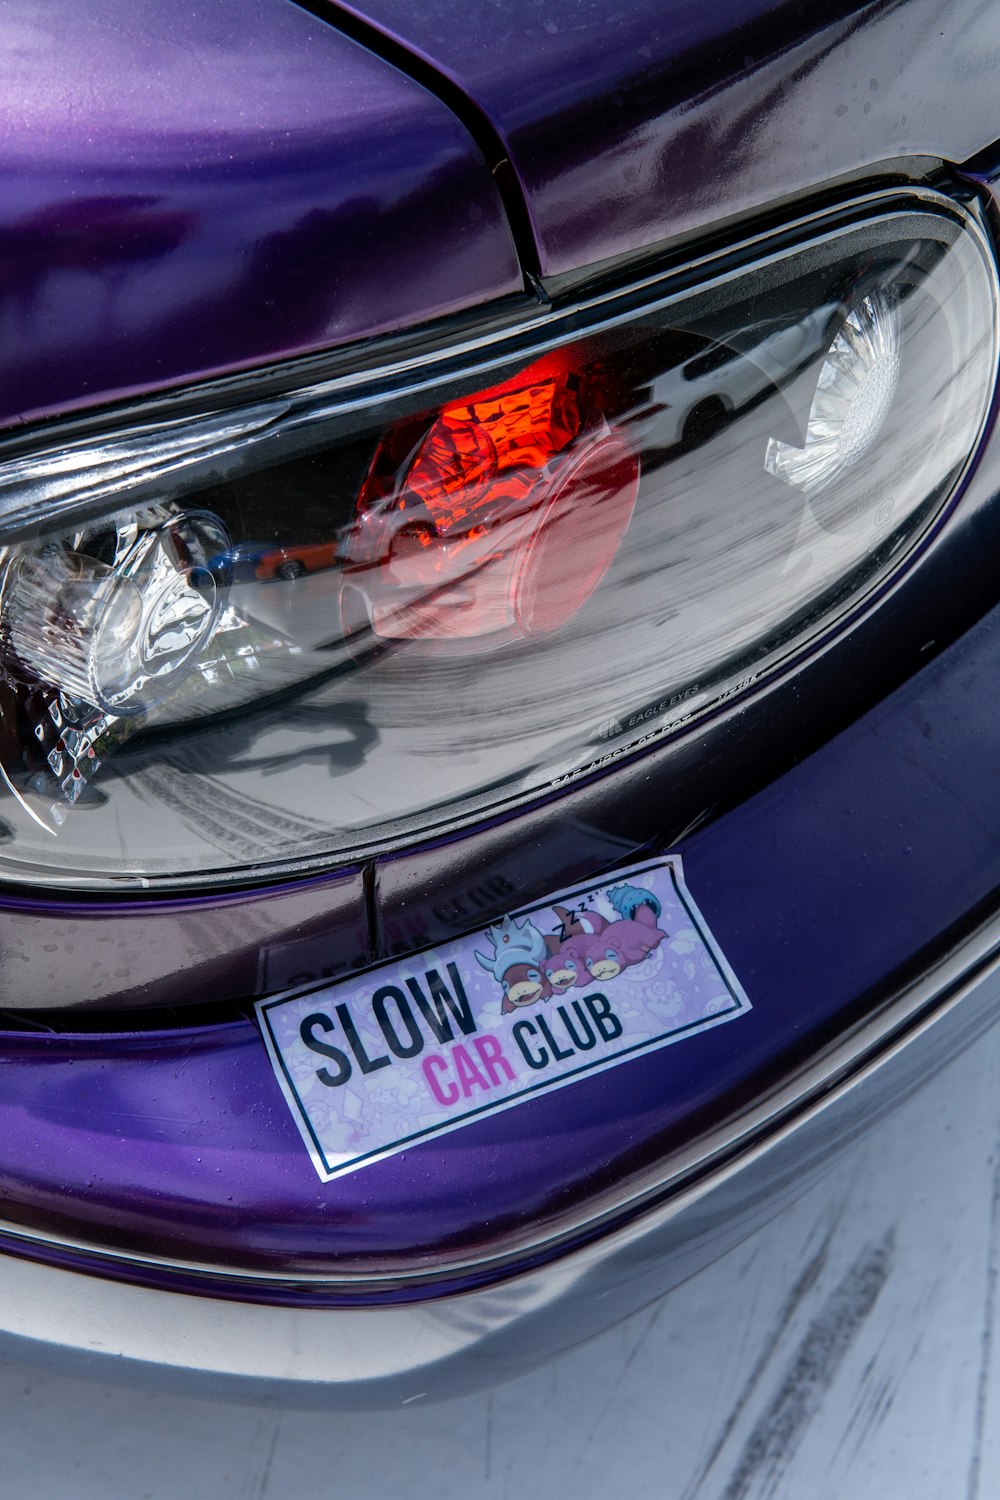 a purple car with a slow car club sticker on it